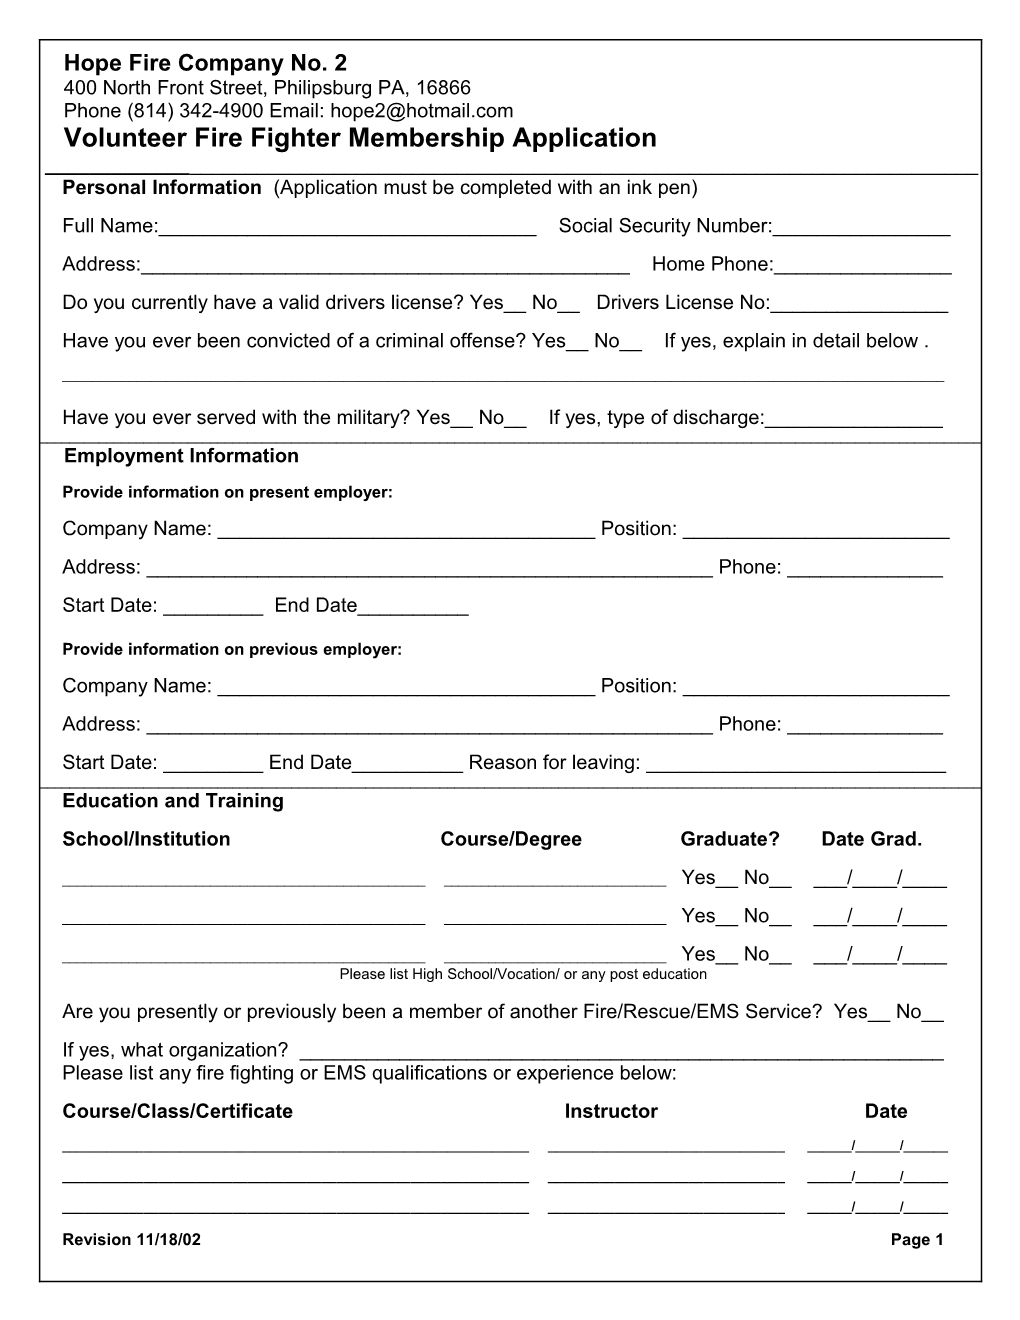 HFC Membership Application